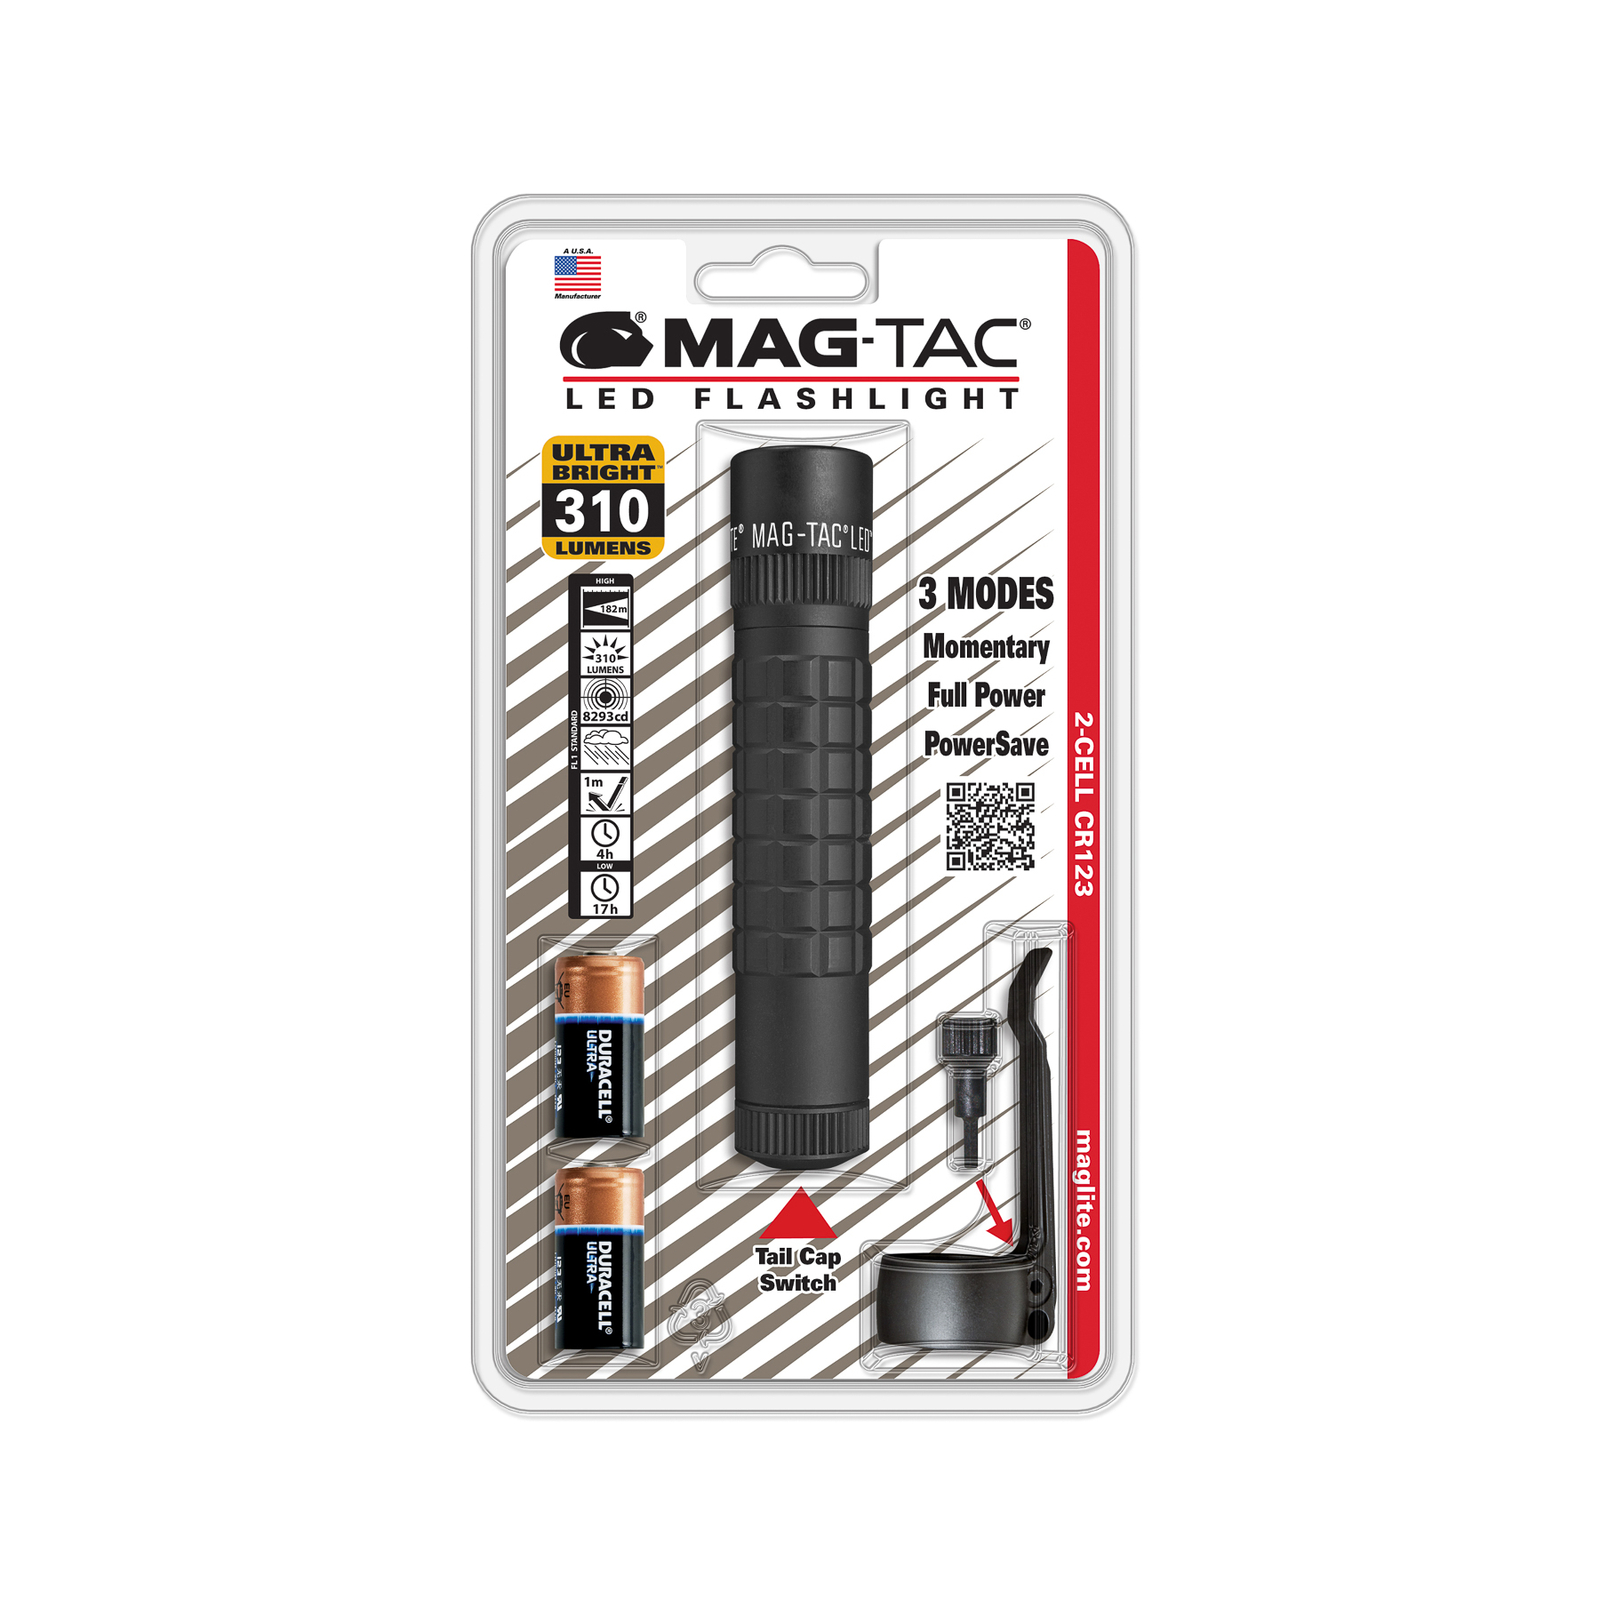 Linterna LED Maglite Mag-Tac, 2 Cell CR123, negra